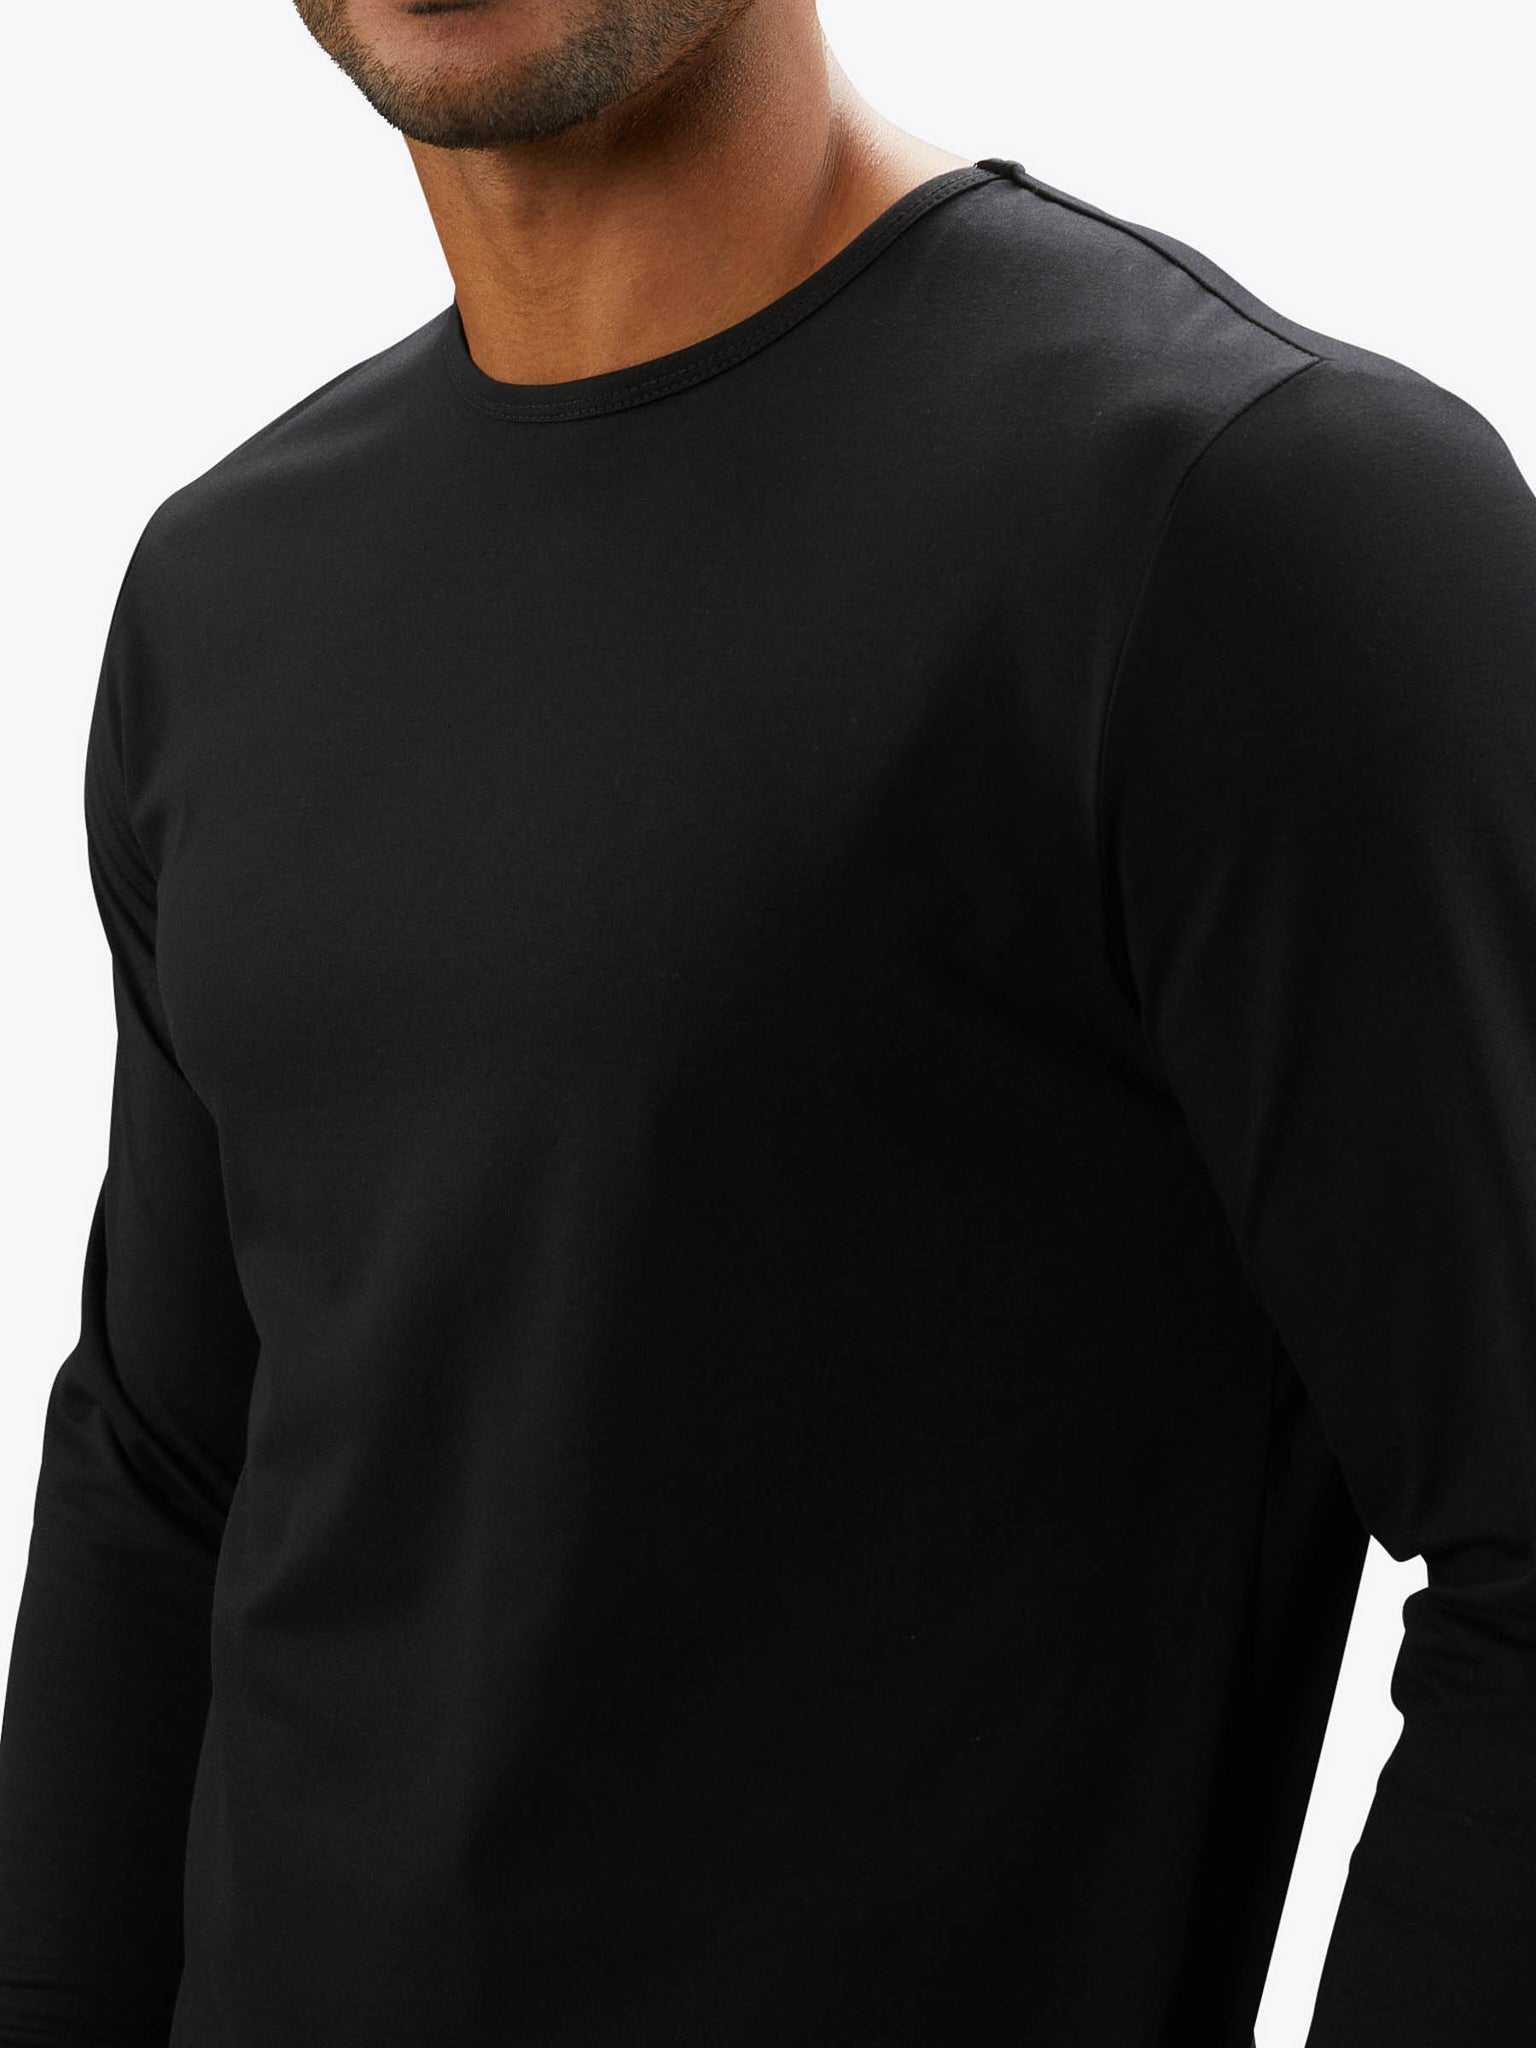 Jersey T Shirt, Curved Hem Tee, Unisex Short Sleeve T Shirts, Wholesale  T Shirts